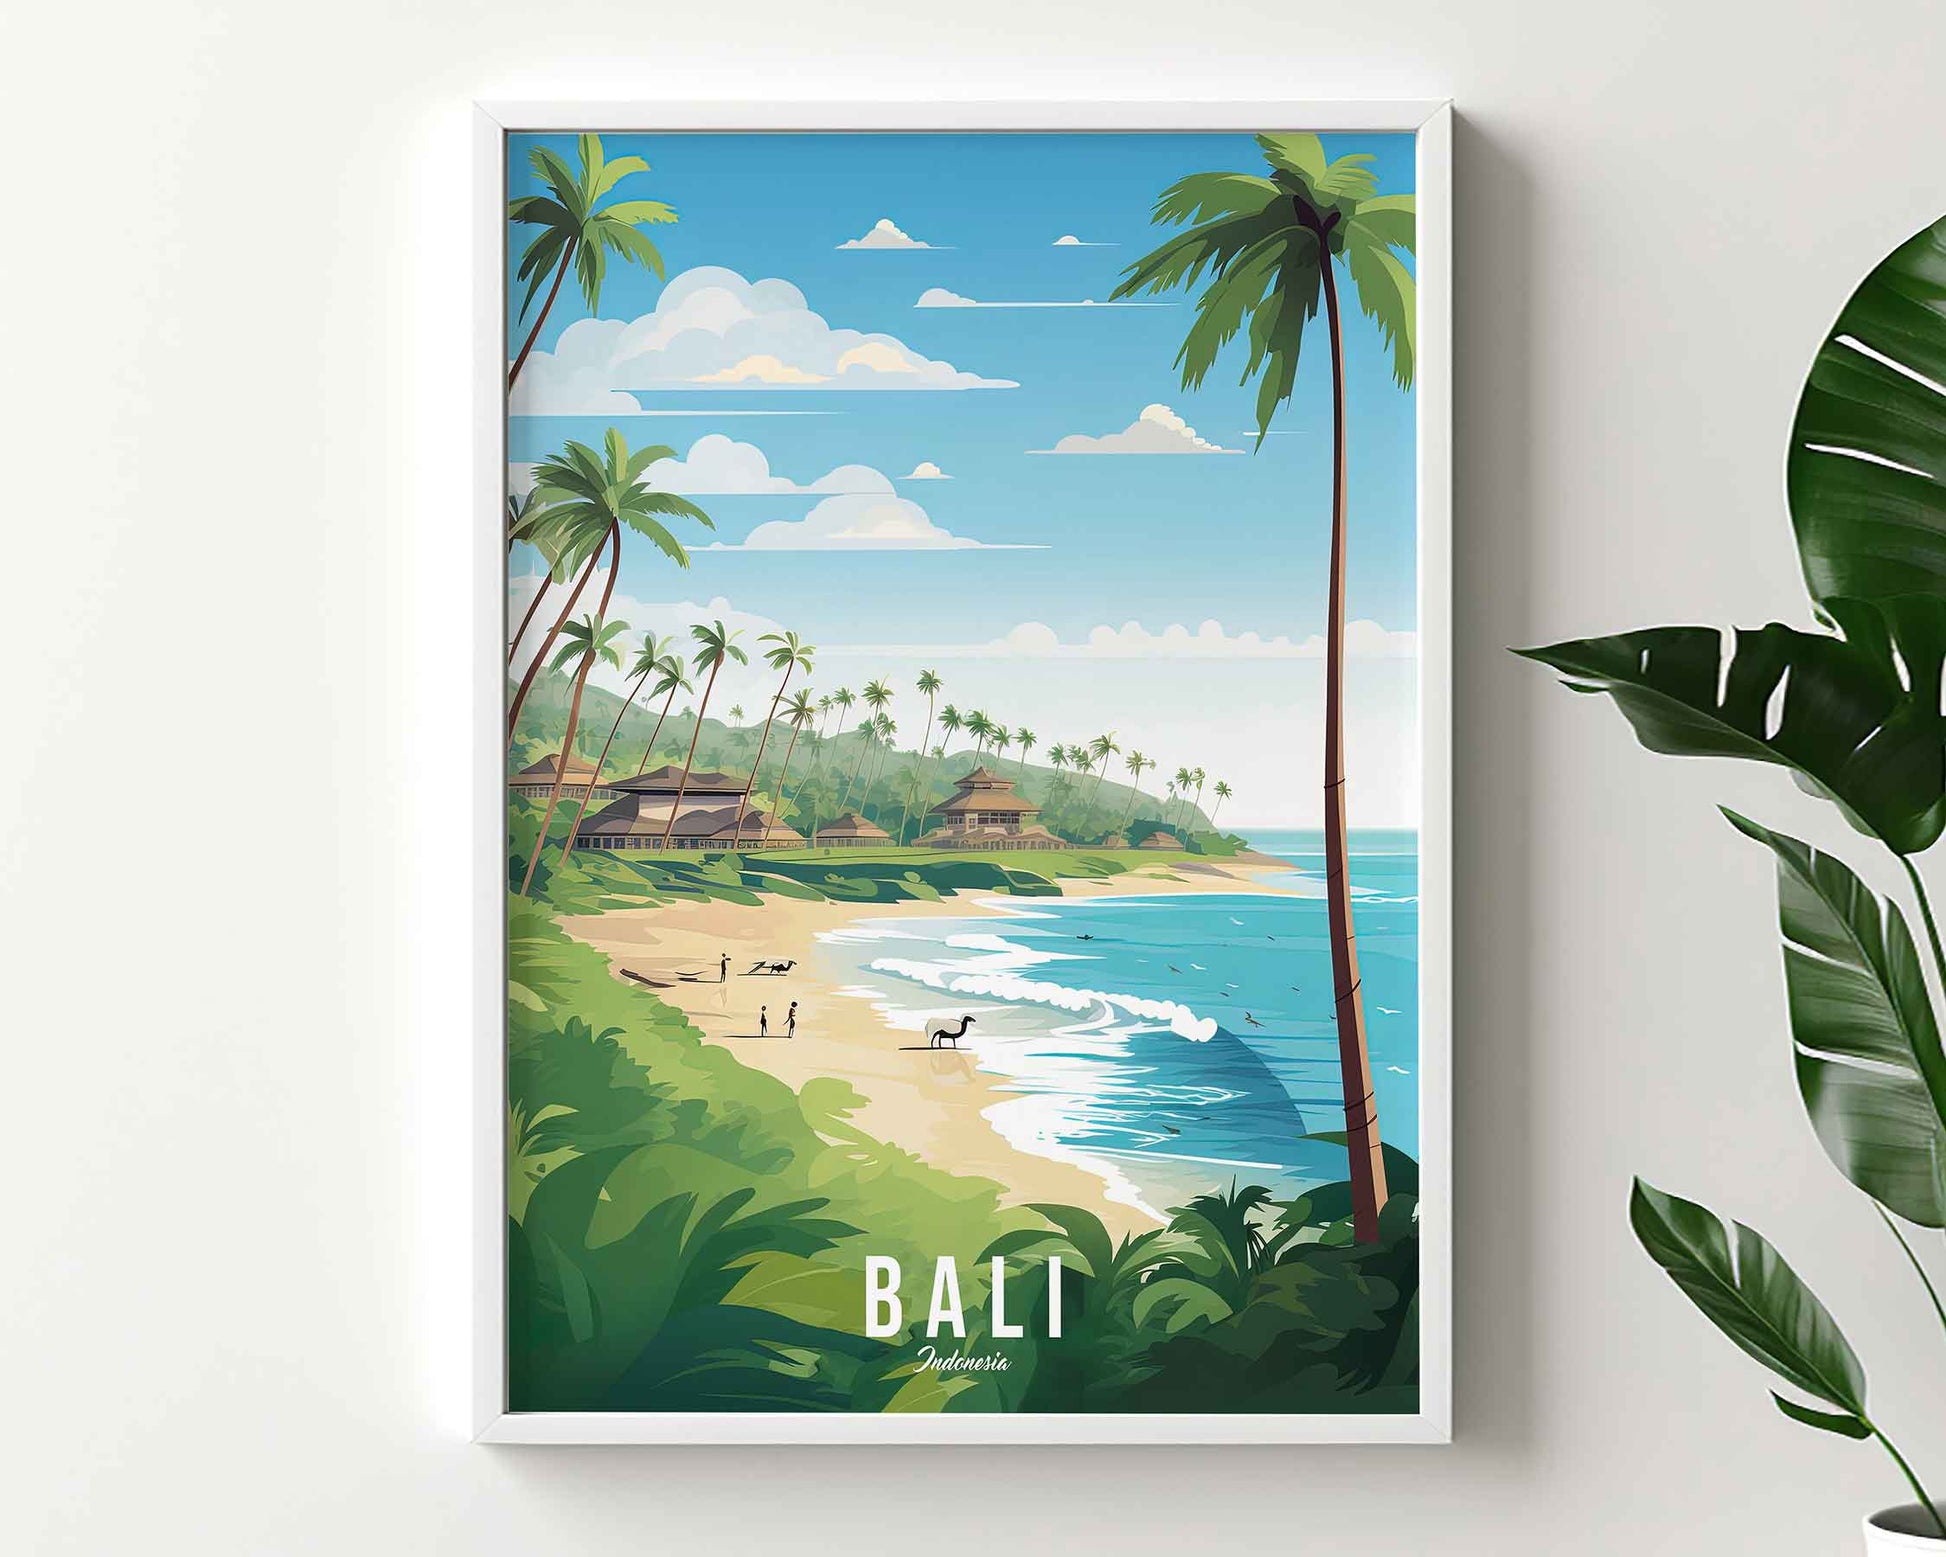 Framed Image of Bali Indonesia Illustration Travel Poster Prints Wall Art